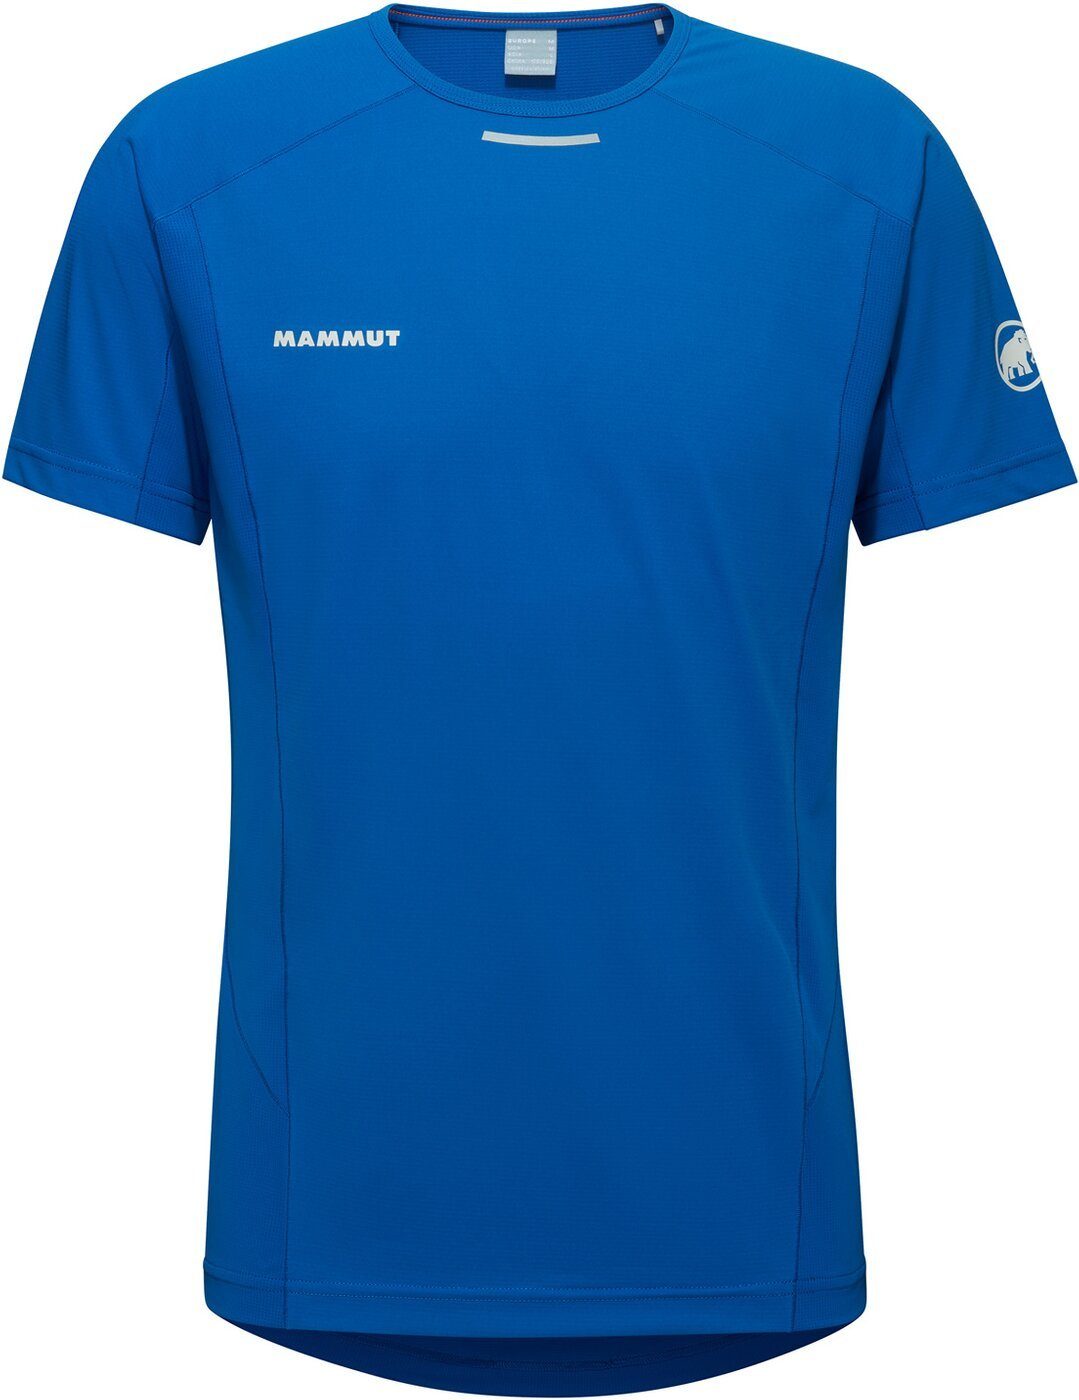 Aenergy Herren Mammut Funktions-T-Shirt blau FL Men Funktionsshirt